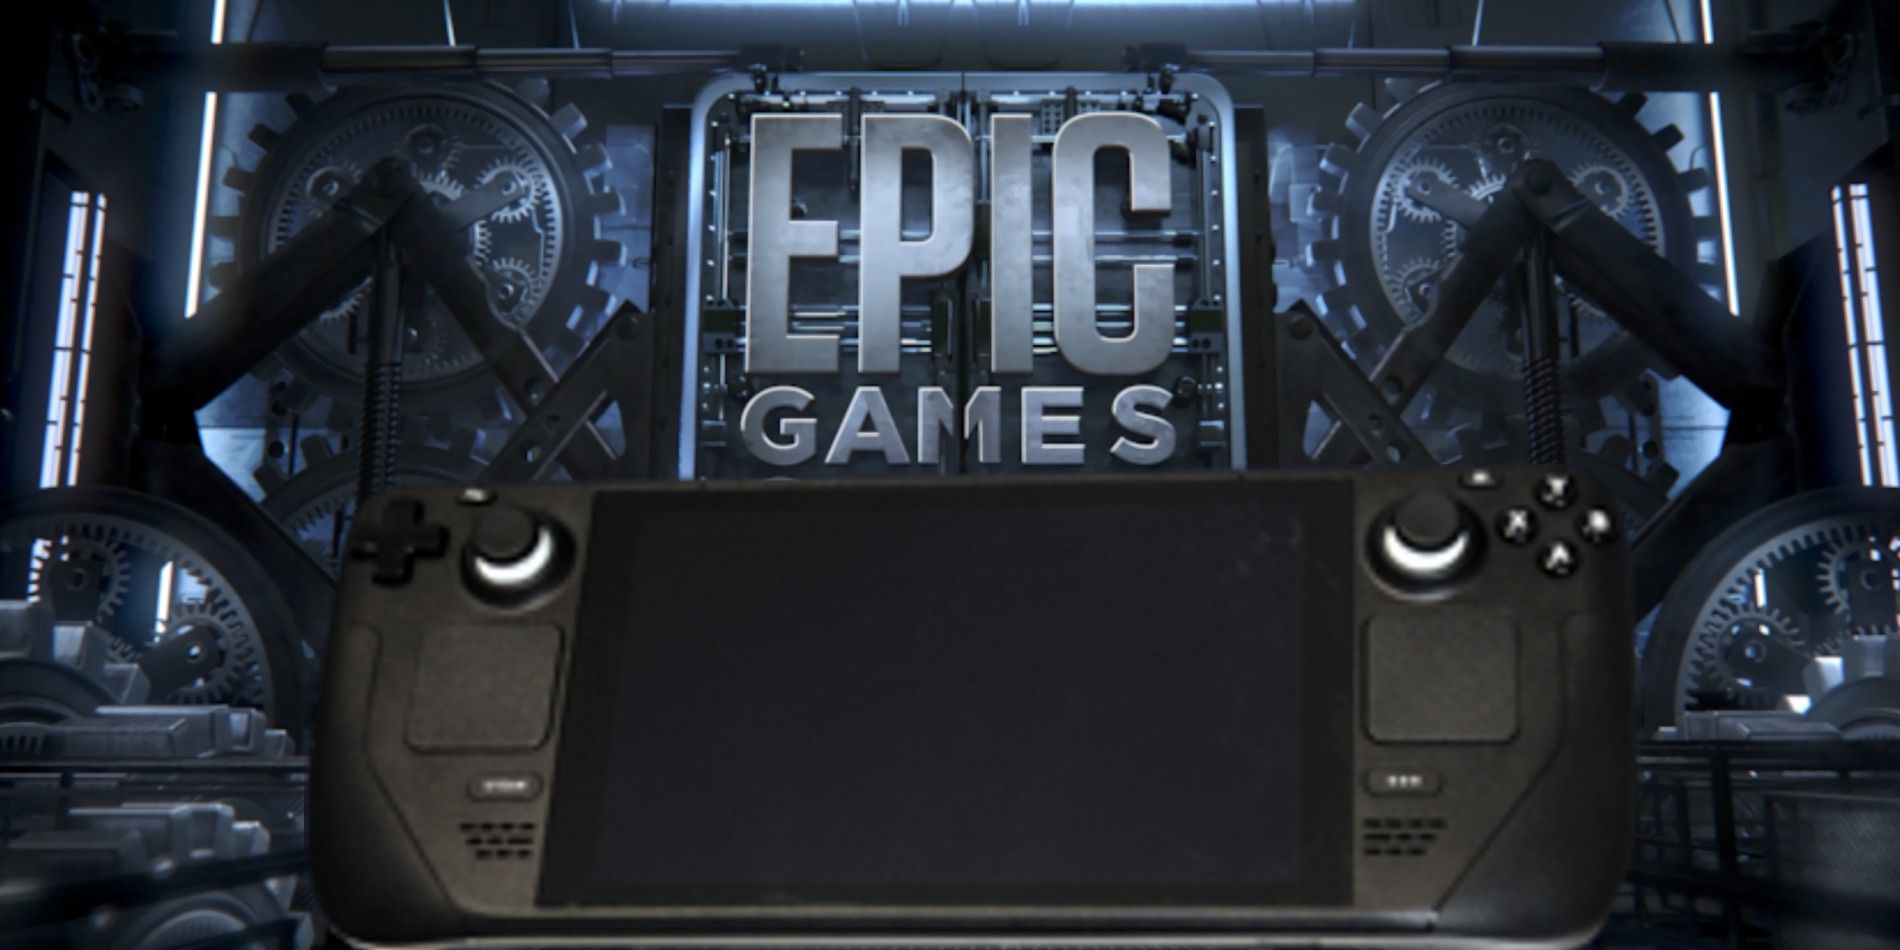 A Steam Deck rests below the Epic Games logo.